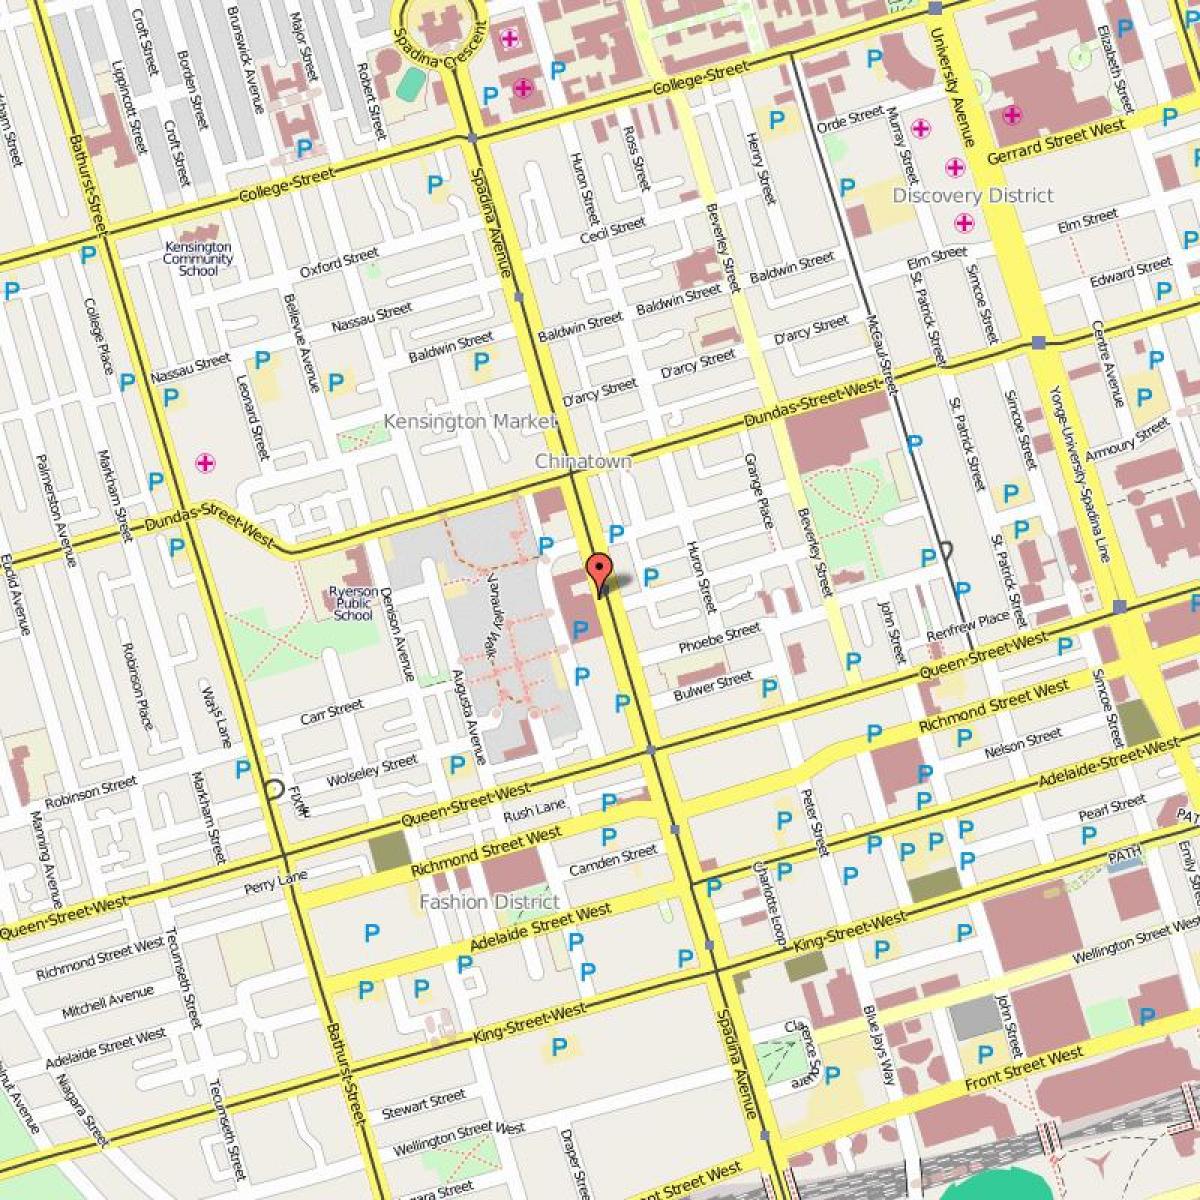 Mapa de distrito de Chinatown de Toronto